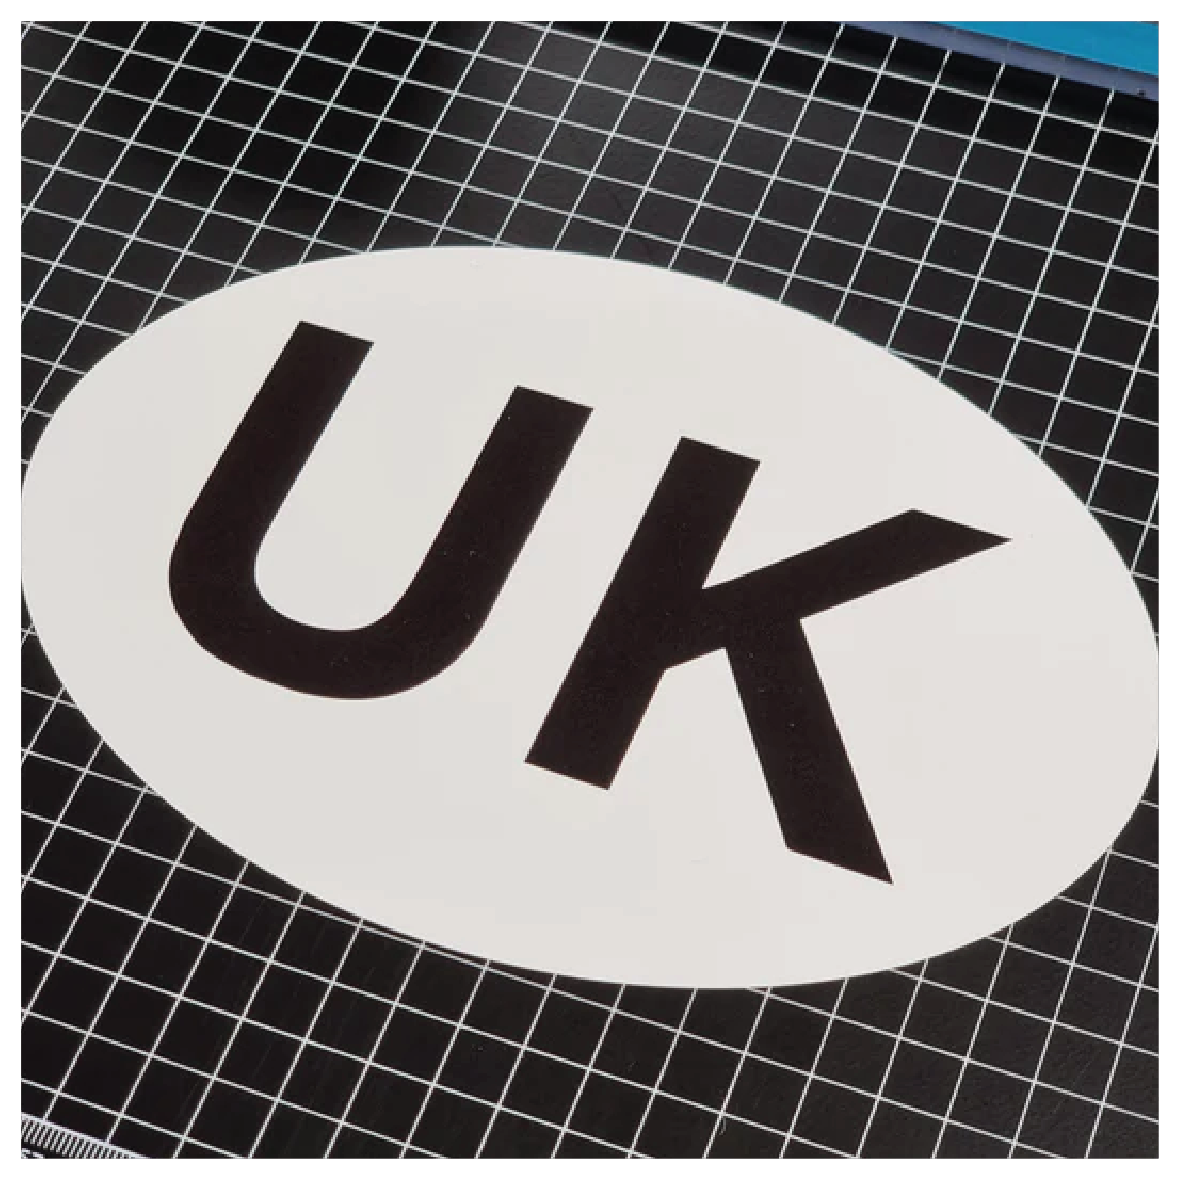 UK sticker to replace GB